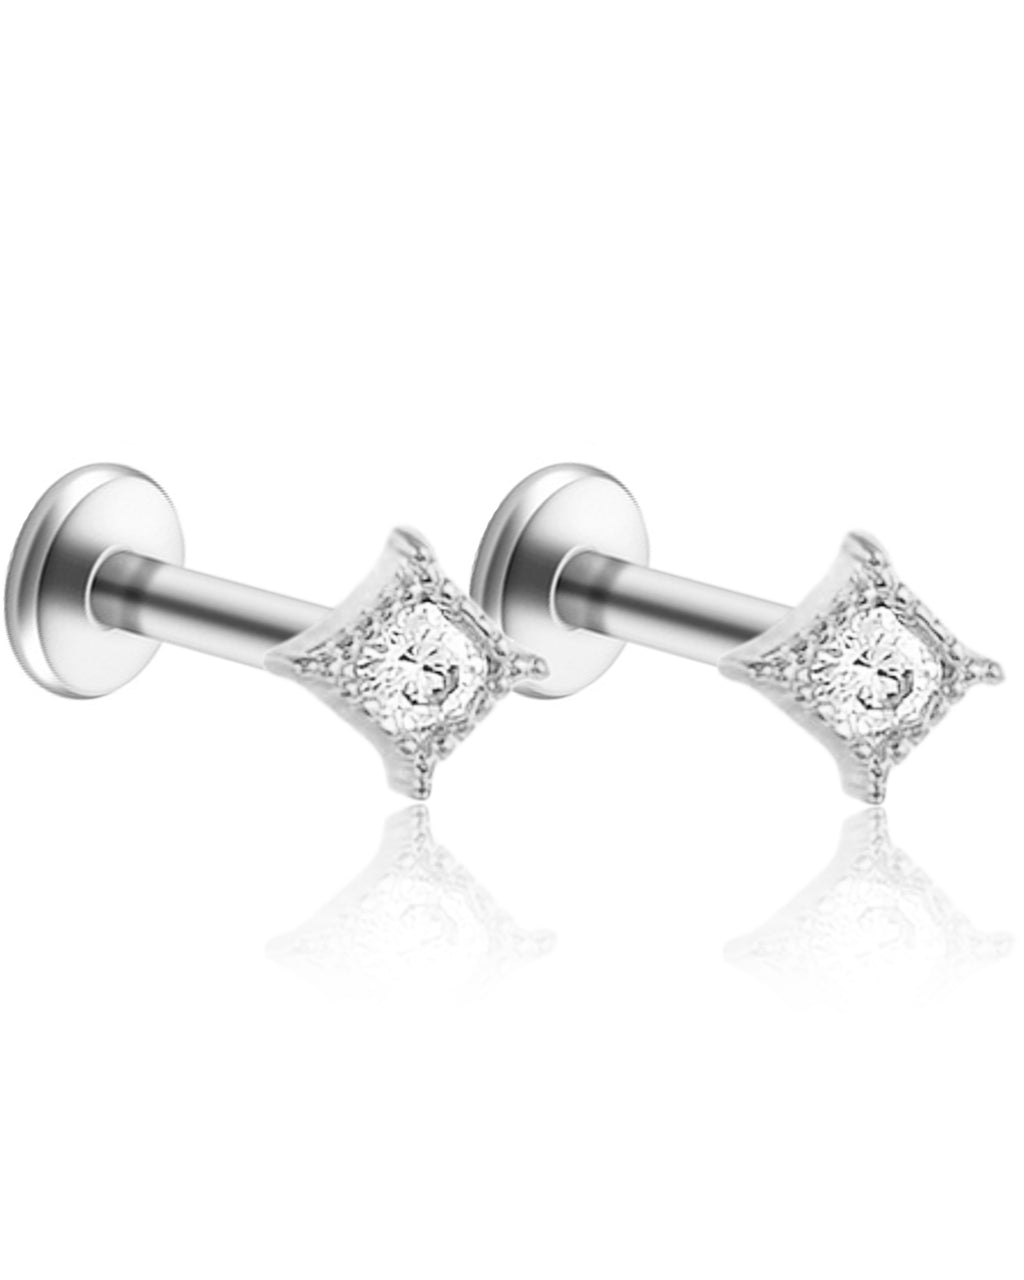 Solid 925 Sterling Silver Flat Back Stud Earrings, 16 Gauge Cartilage Helix  Piercing One Piece